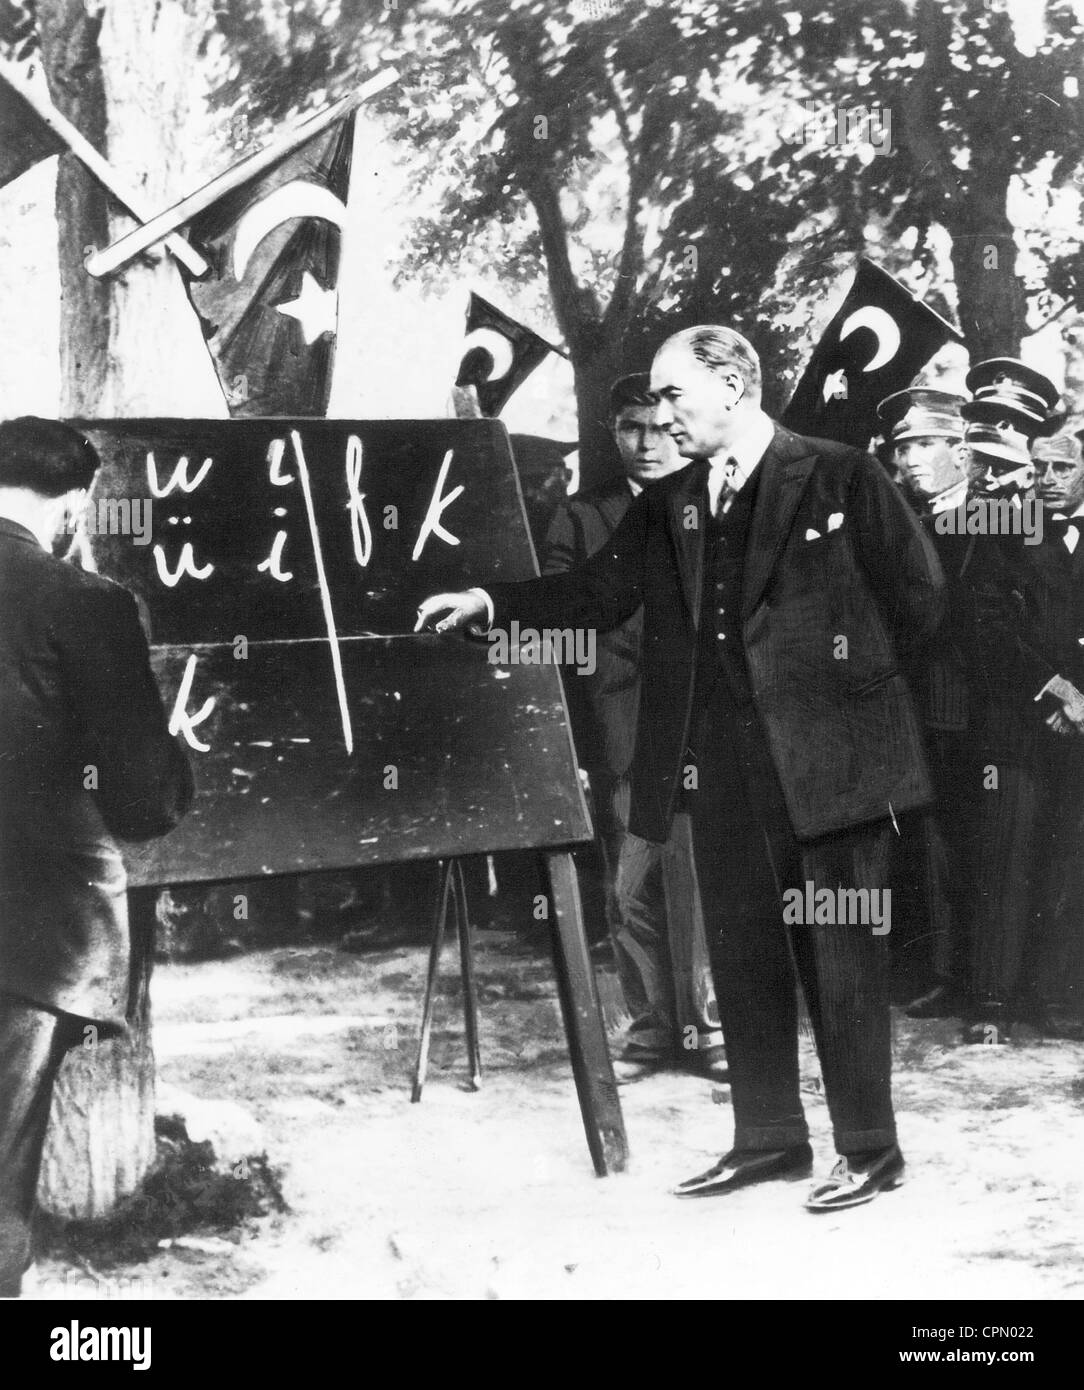 Kamel Ataturk points to Roman letters on a board, 1928 Stock Photo